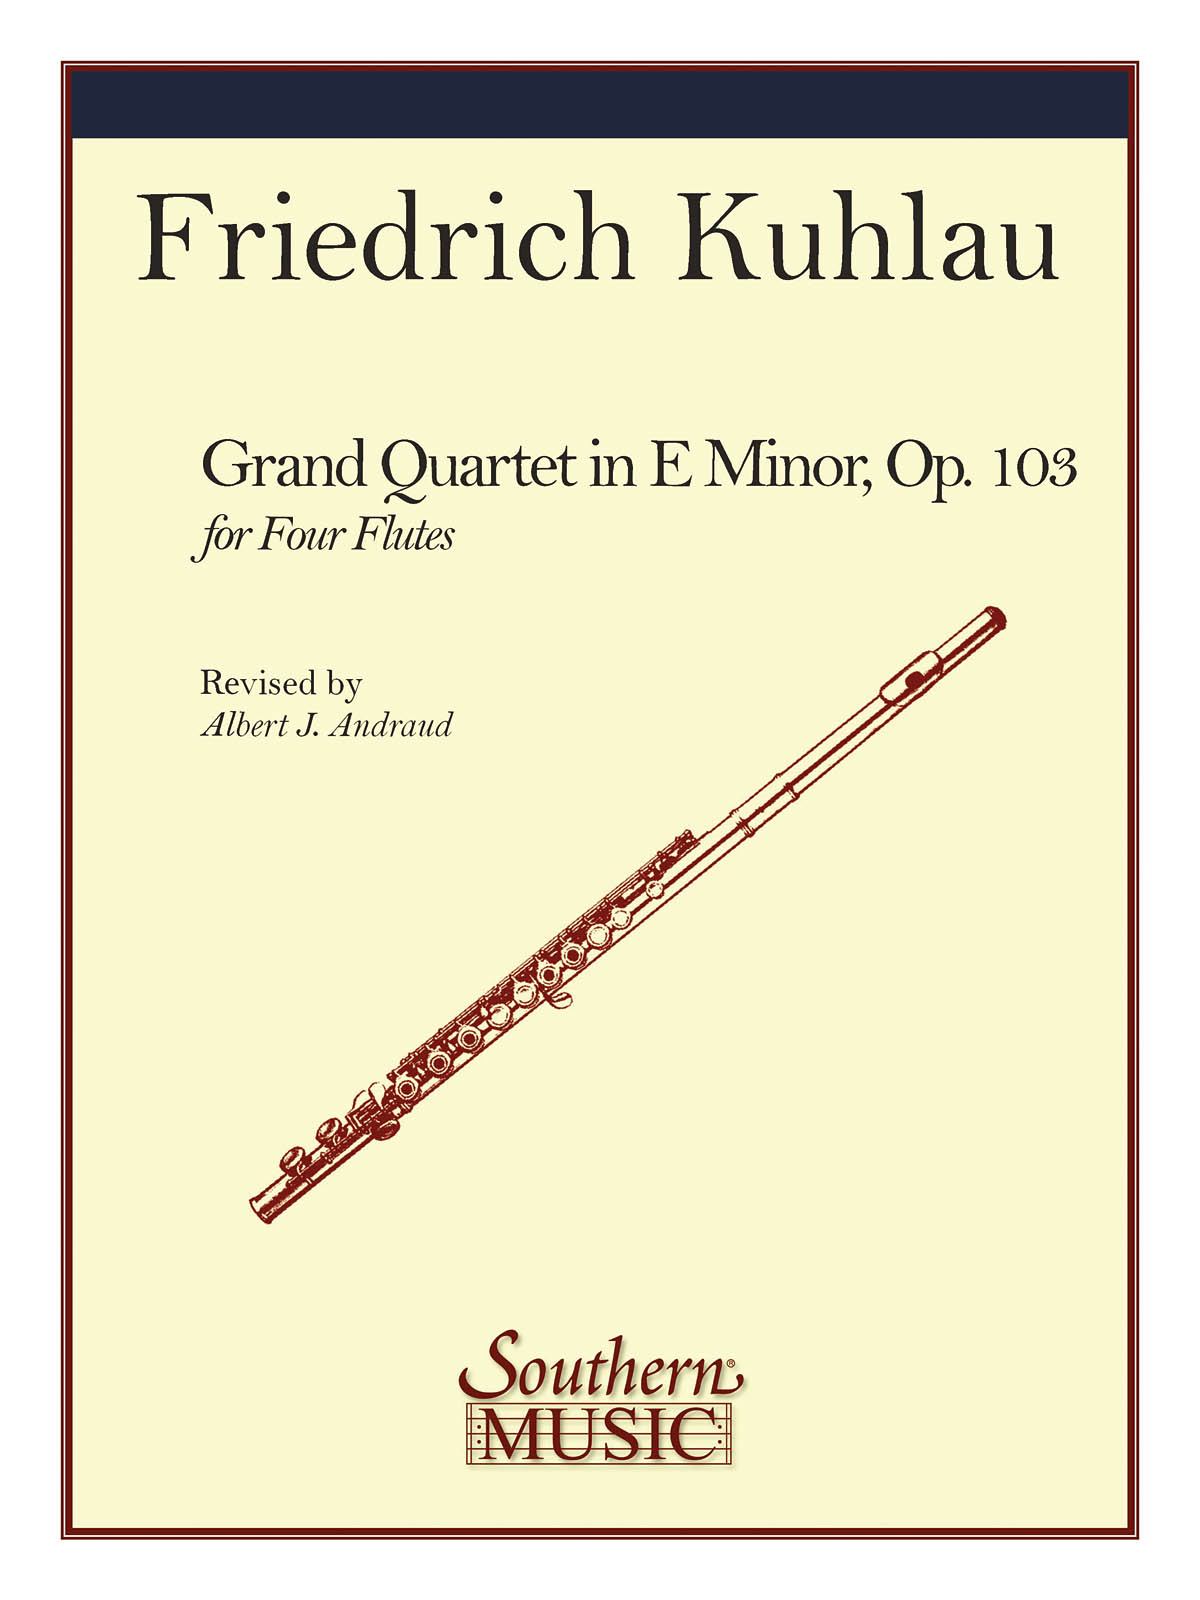 Friedrich Kuhlau: Grand Quartet, Op 103